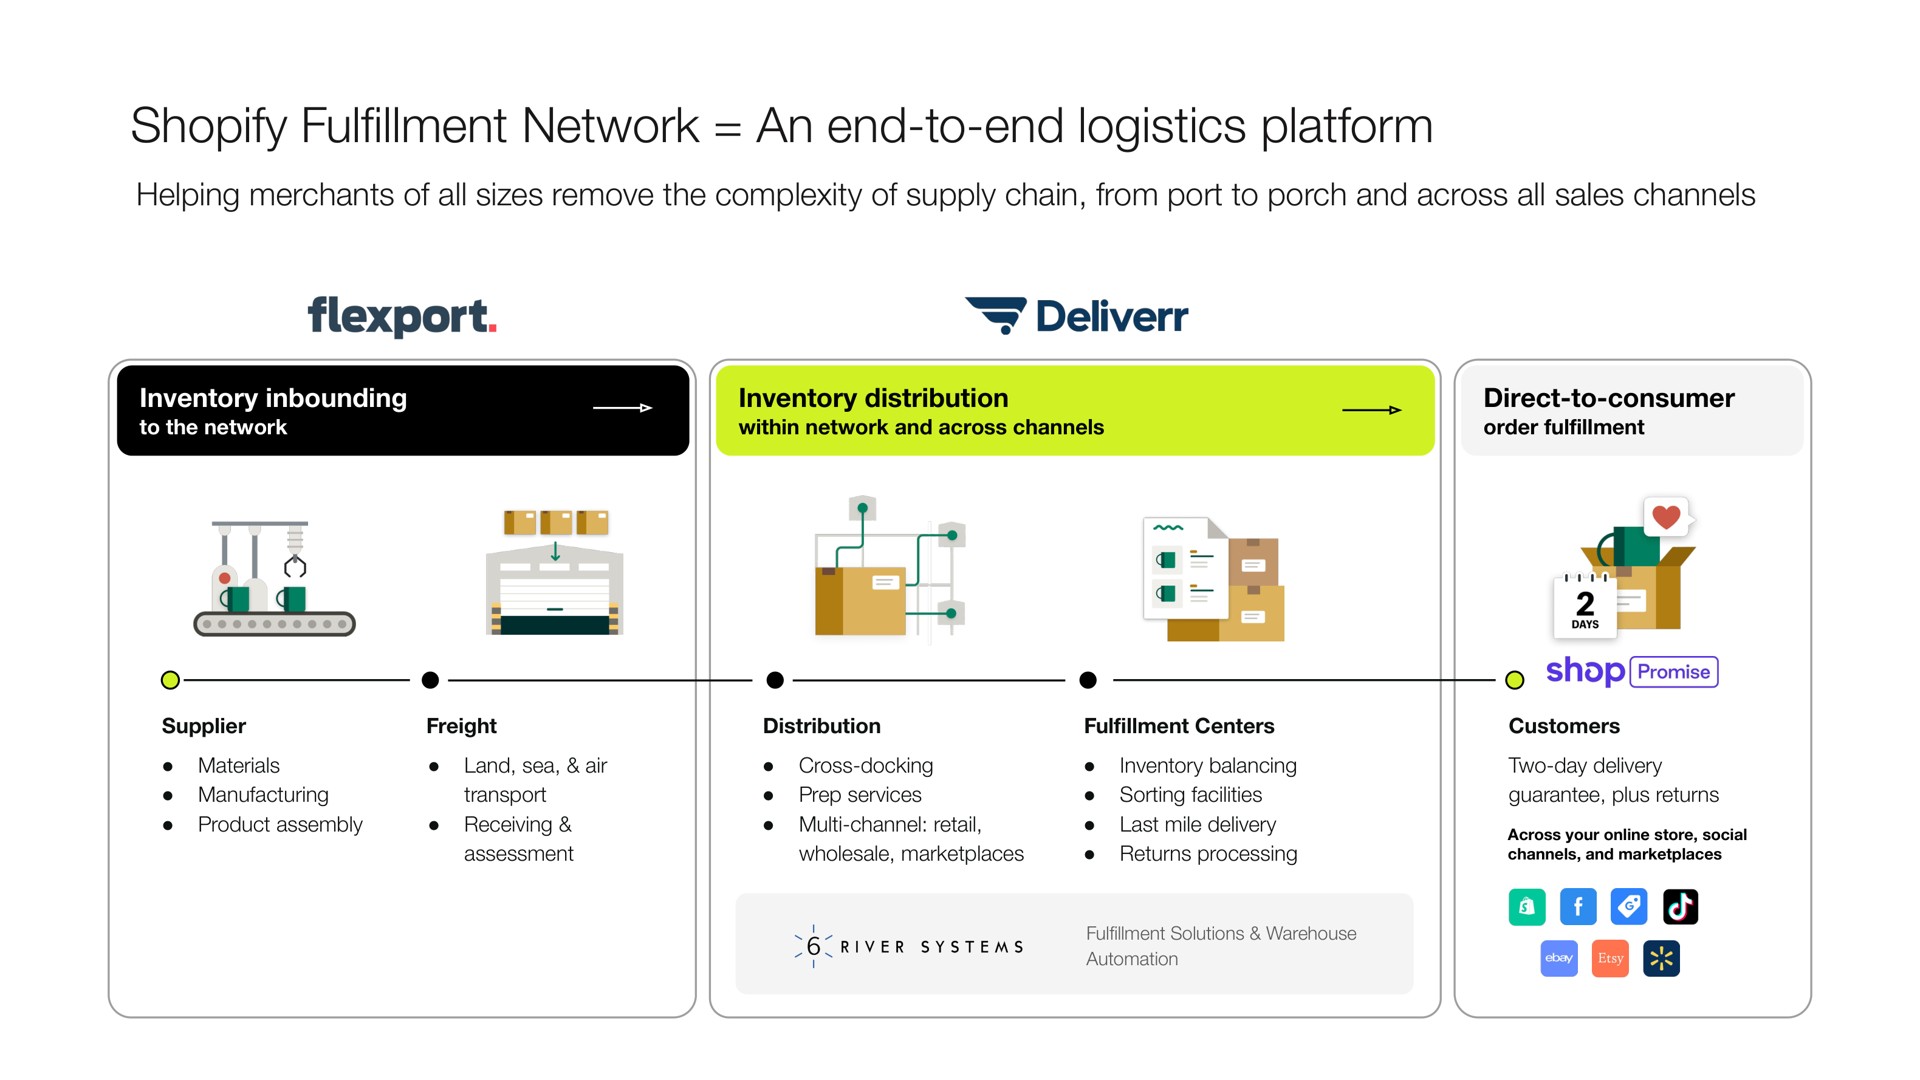 fulfillment network an end to end logistics platform a shap promise | Shopify